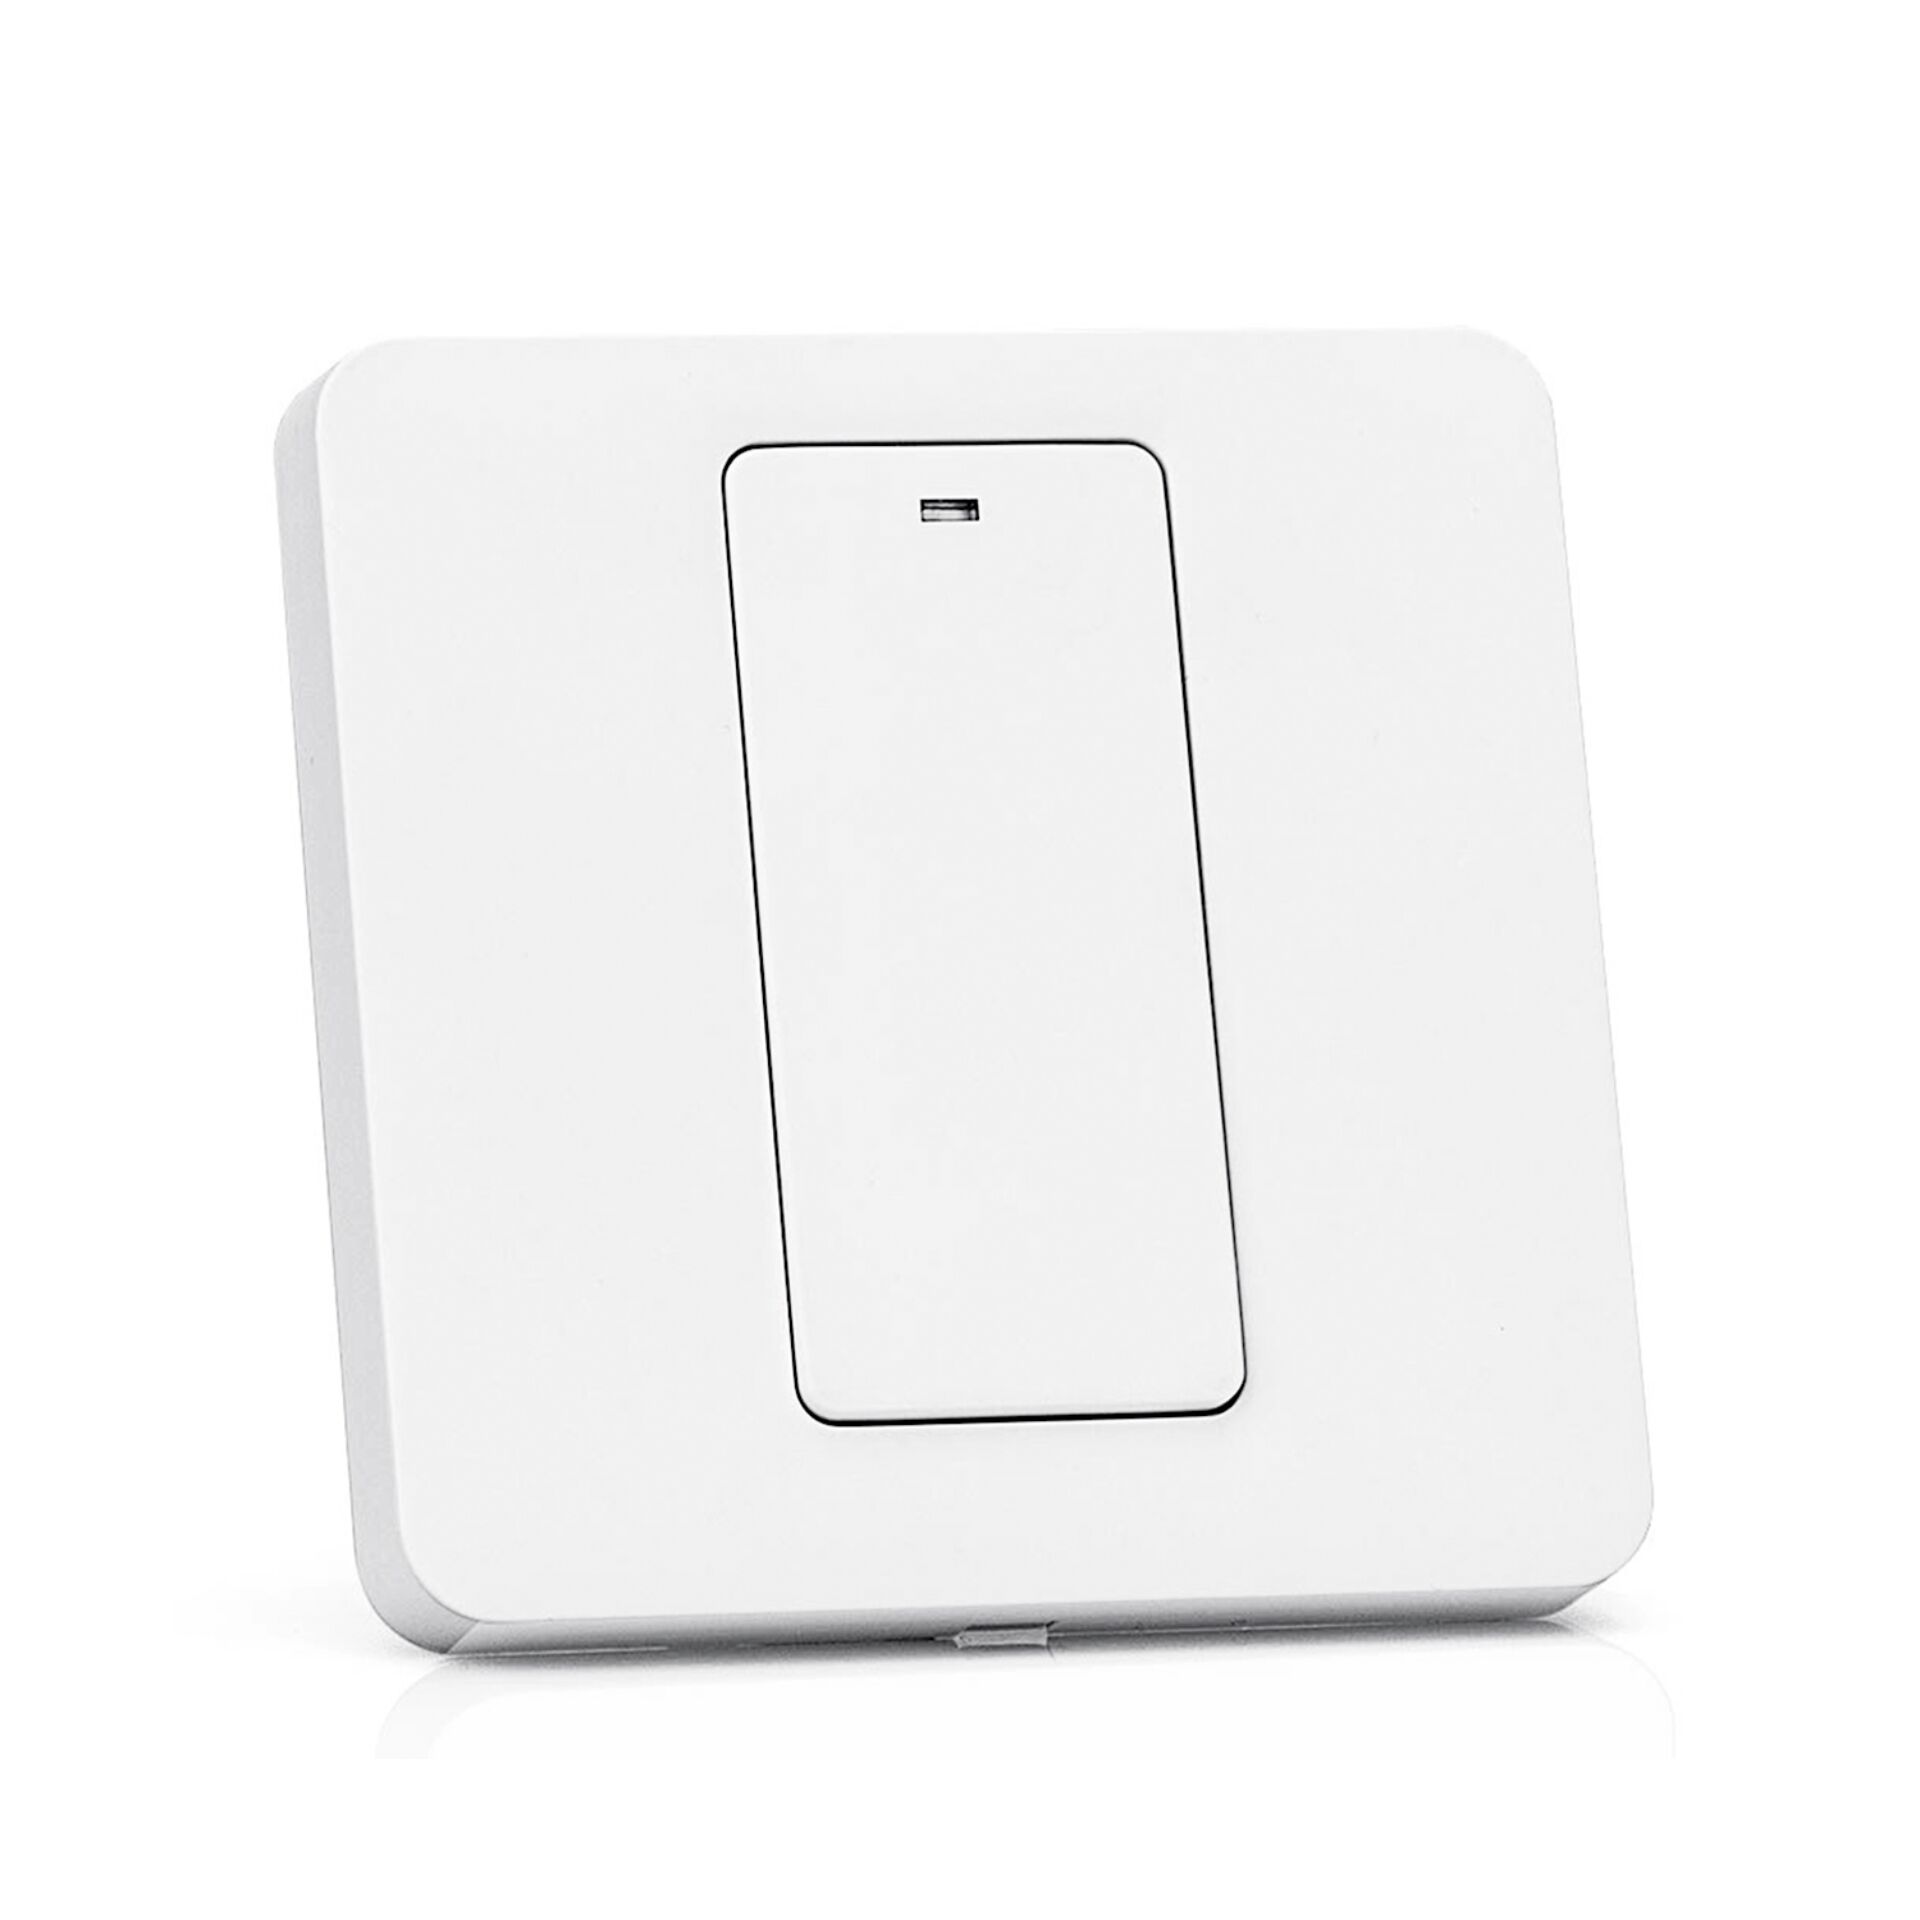 Meross Smart Wi-Fi 1 Way Wall Switch